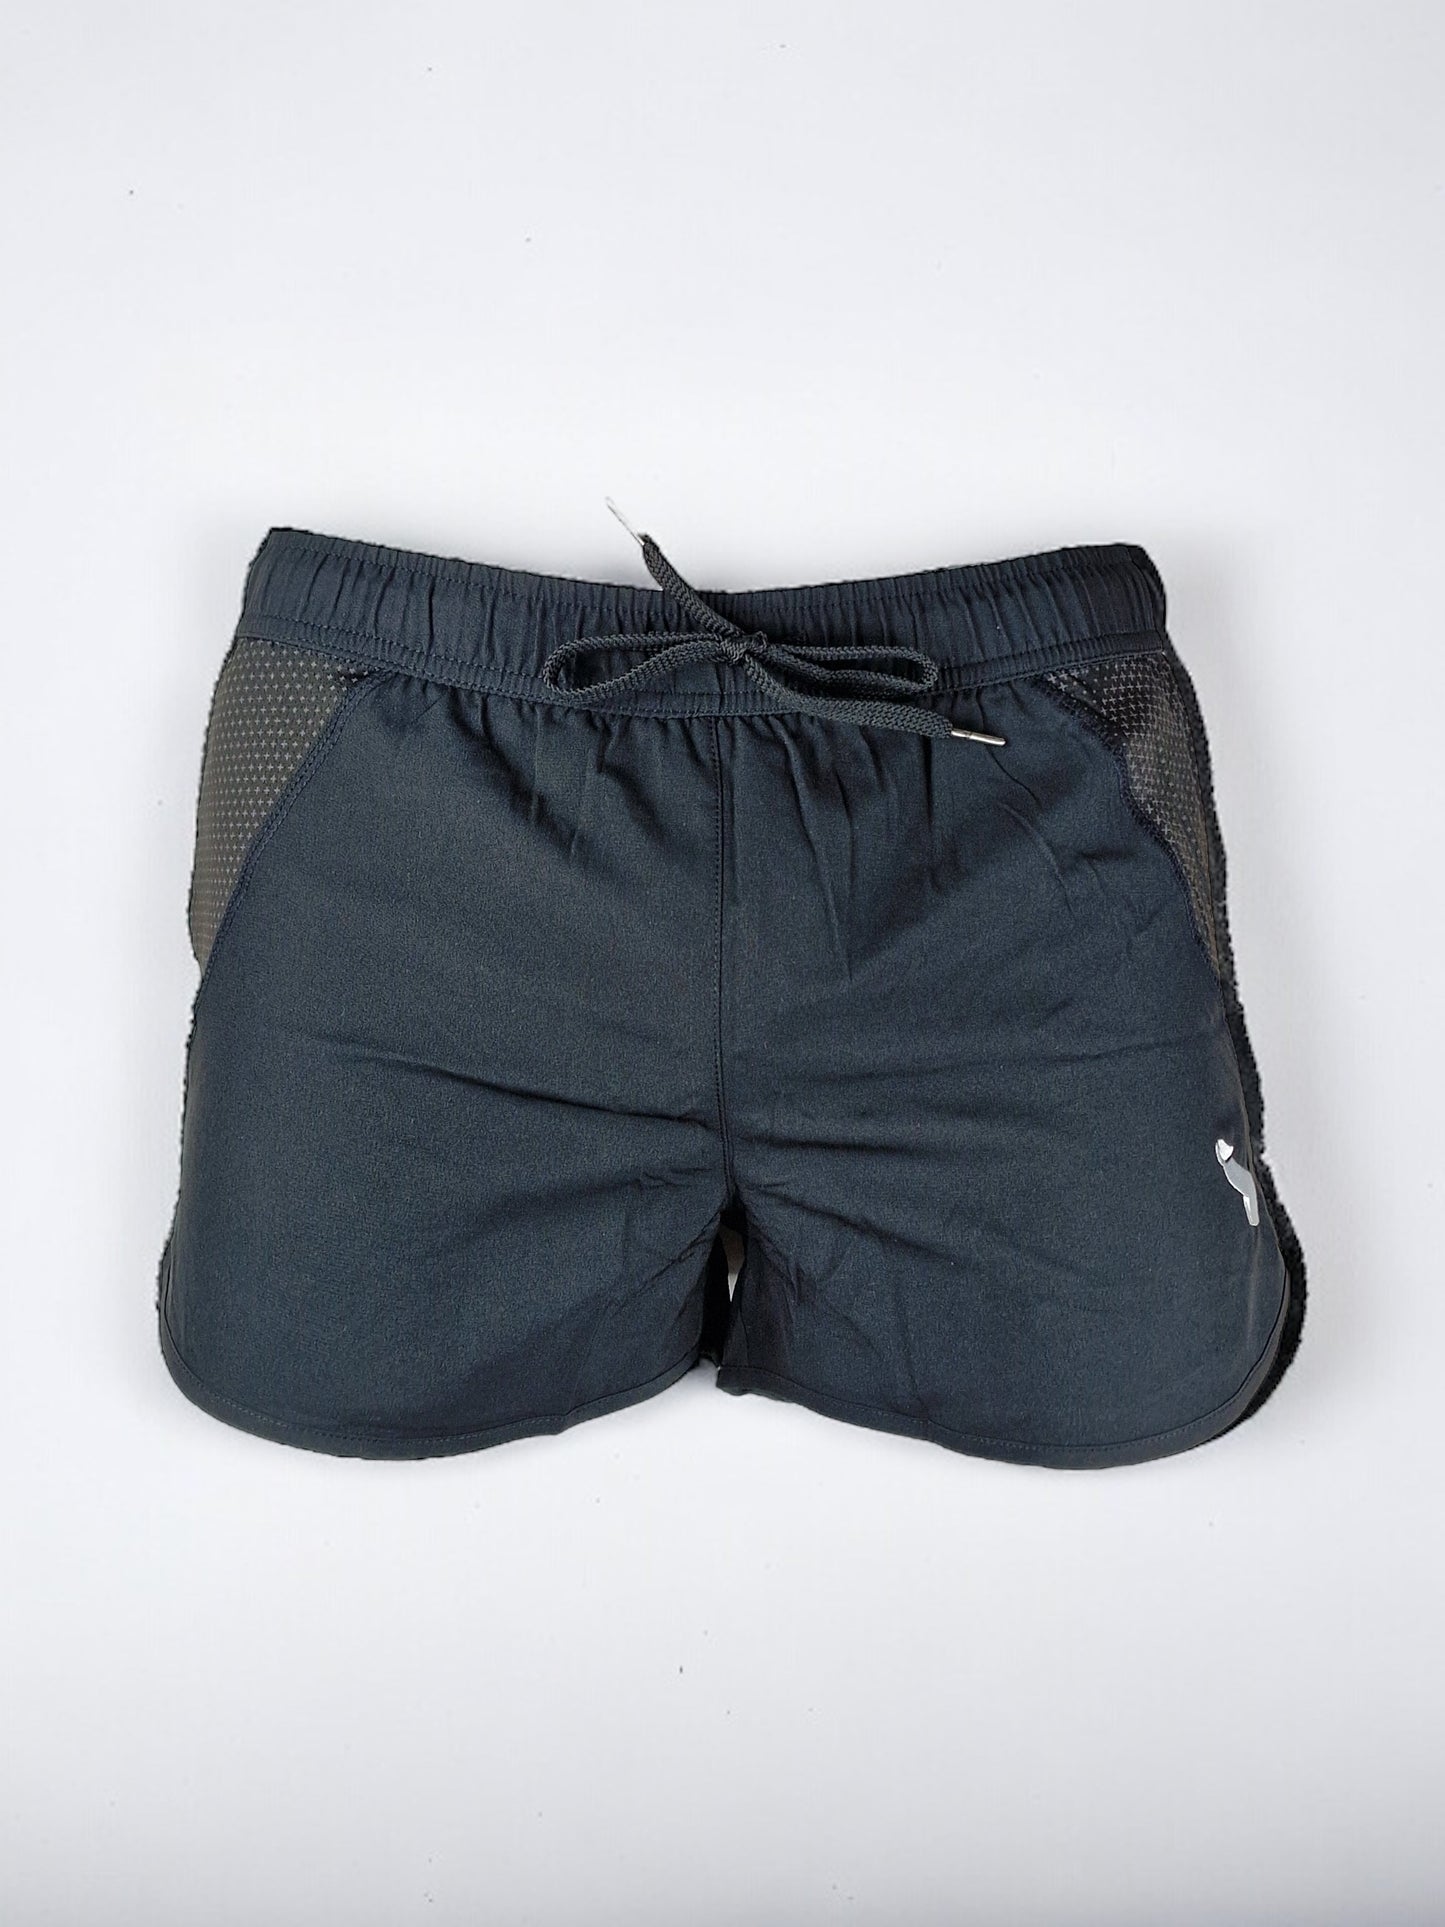 Training shorts / swimming shorts for men or unisex - Black